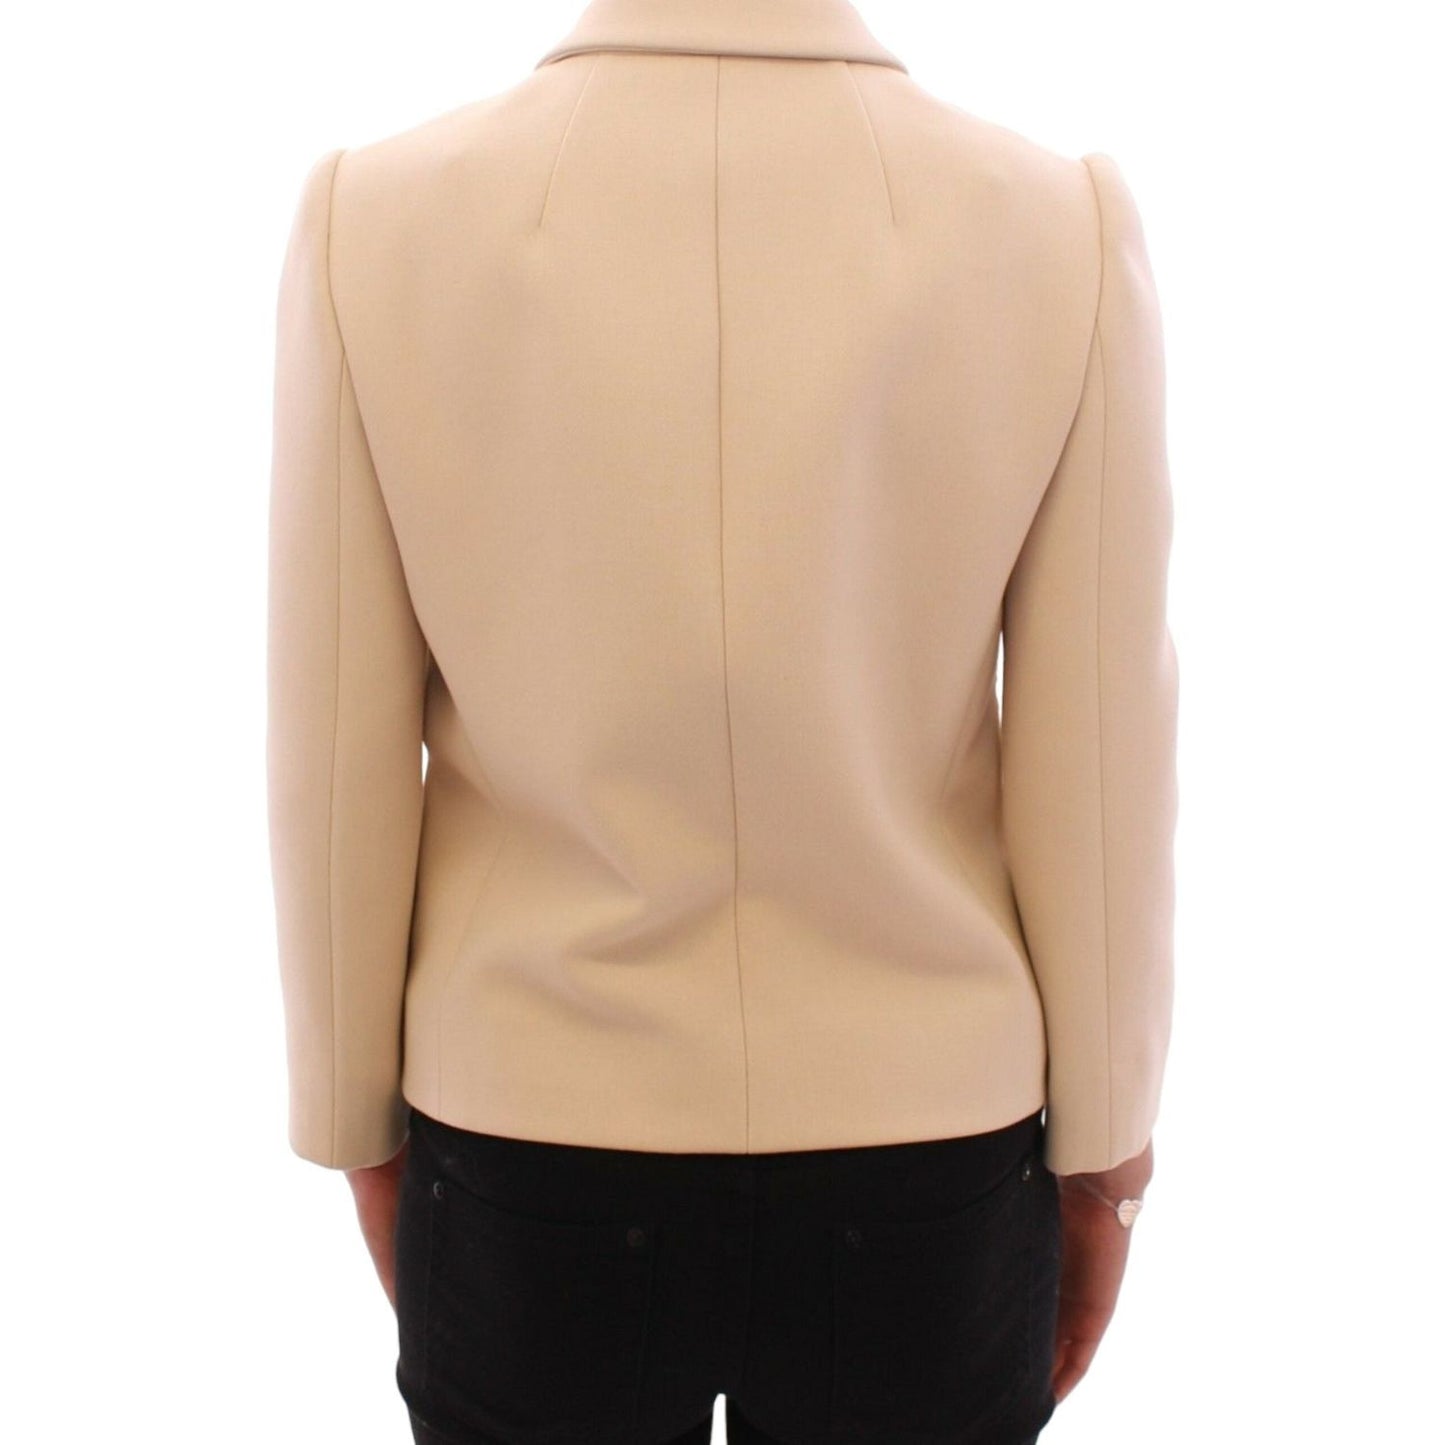 Dolce & Gabbana Elegant Beige Wool-Blend Jacket with Gold Accents Coats & Jackets beige-wool-pearl-button-jacket-blazer-coat